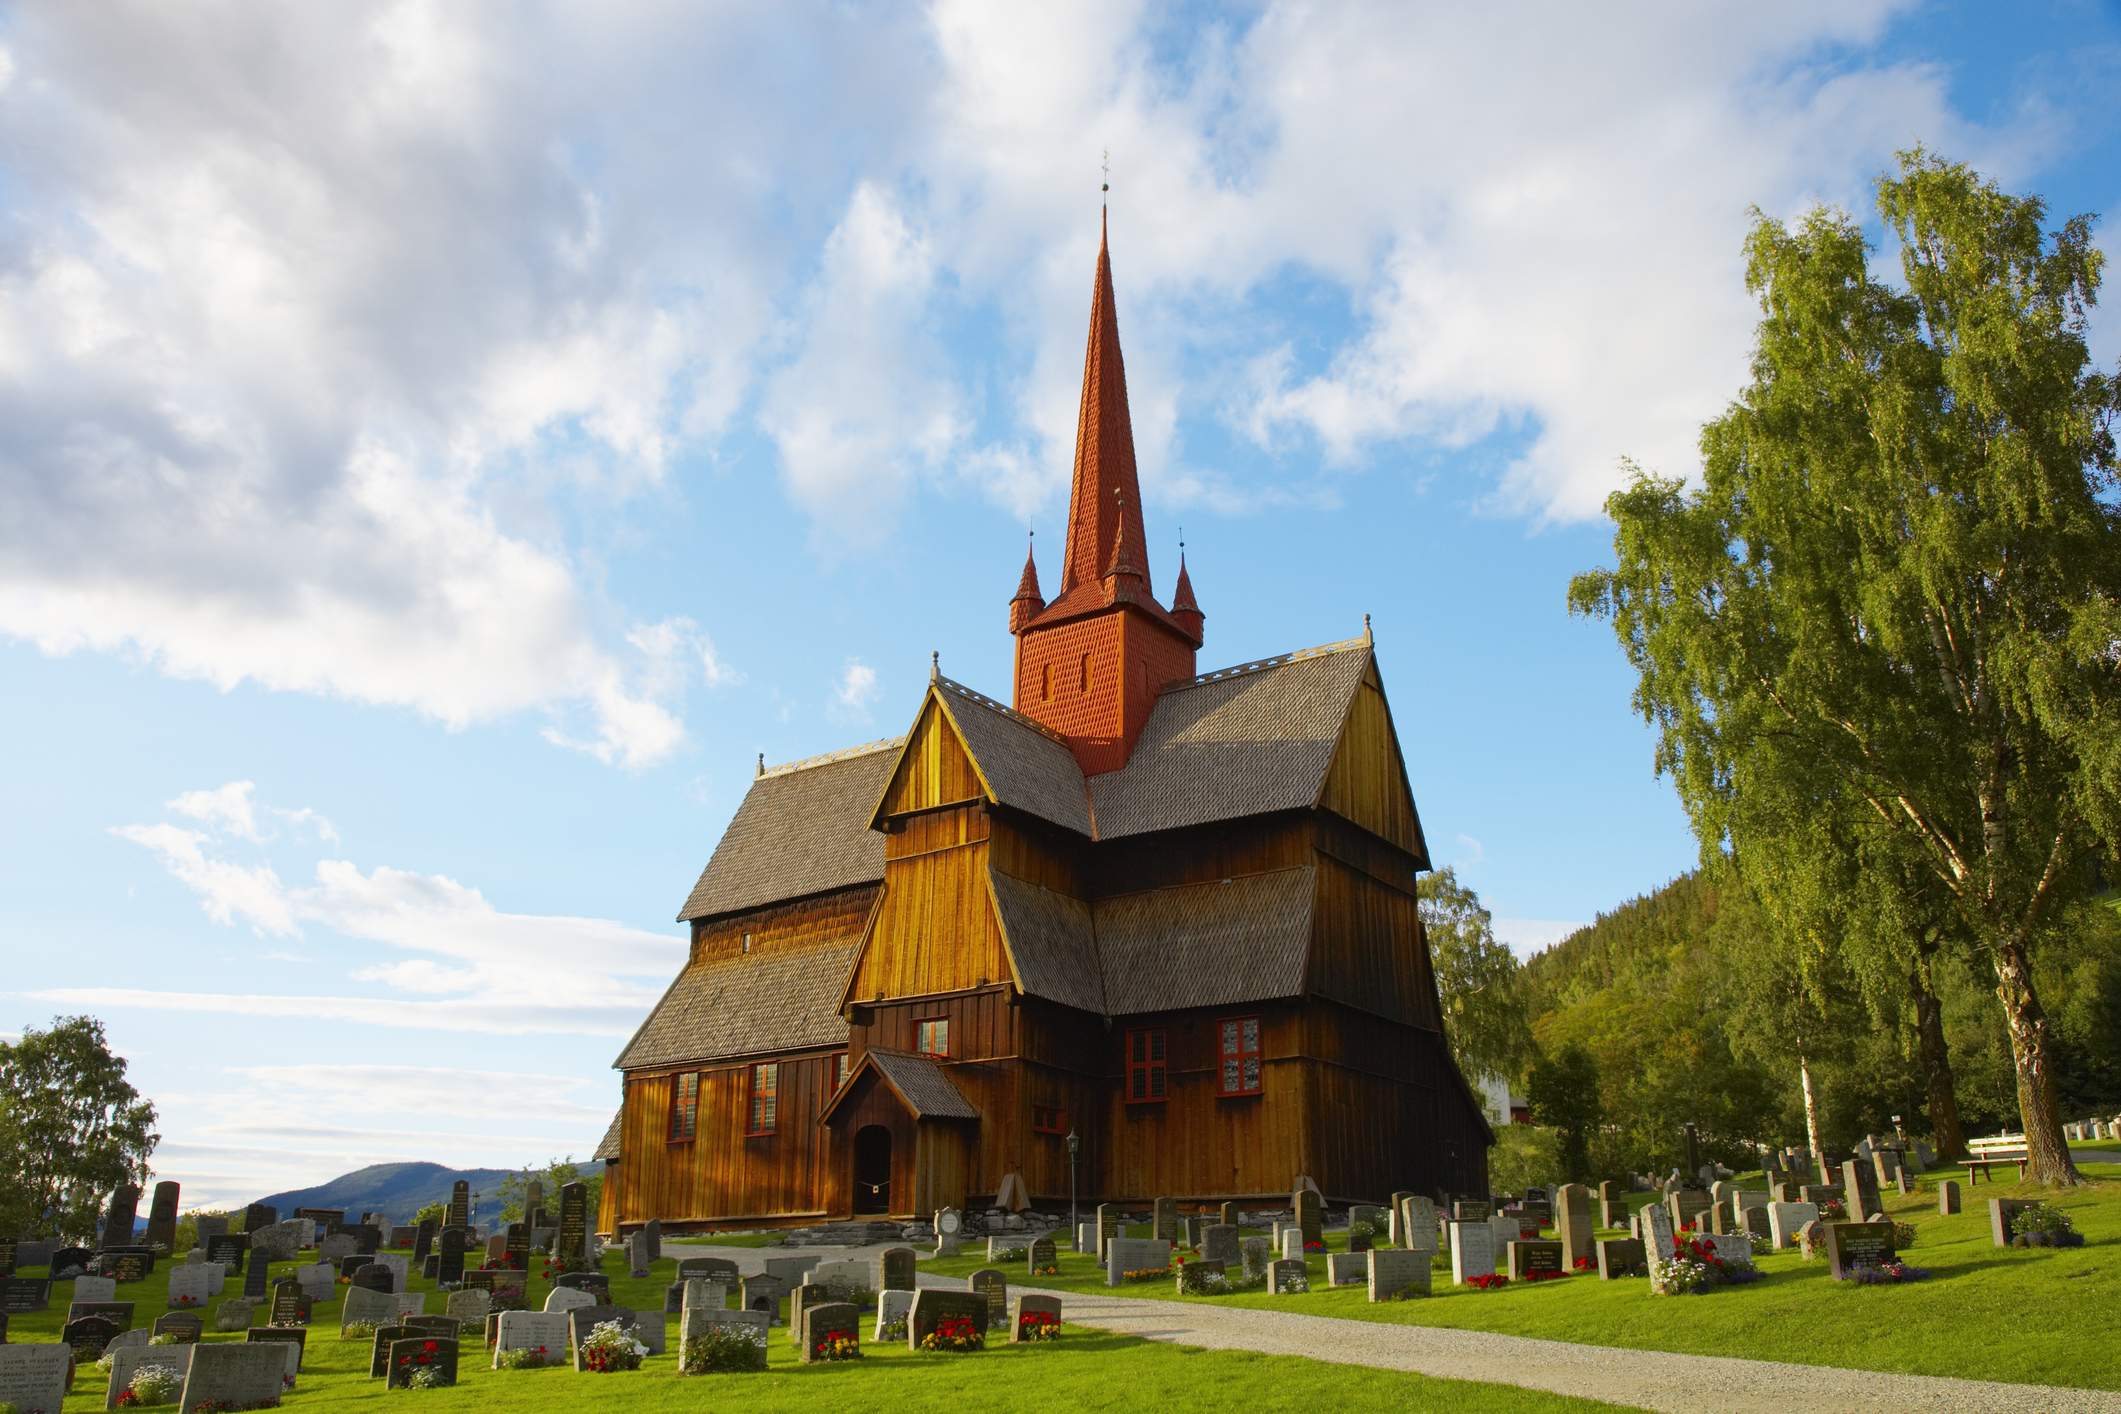 DEST_NORWAY_LILLEHAMMER_CHURCH_gettyimages-sb10069345e-001